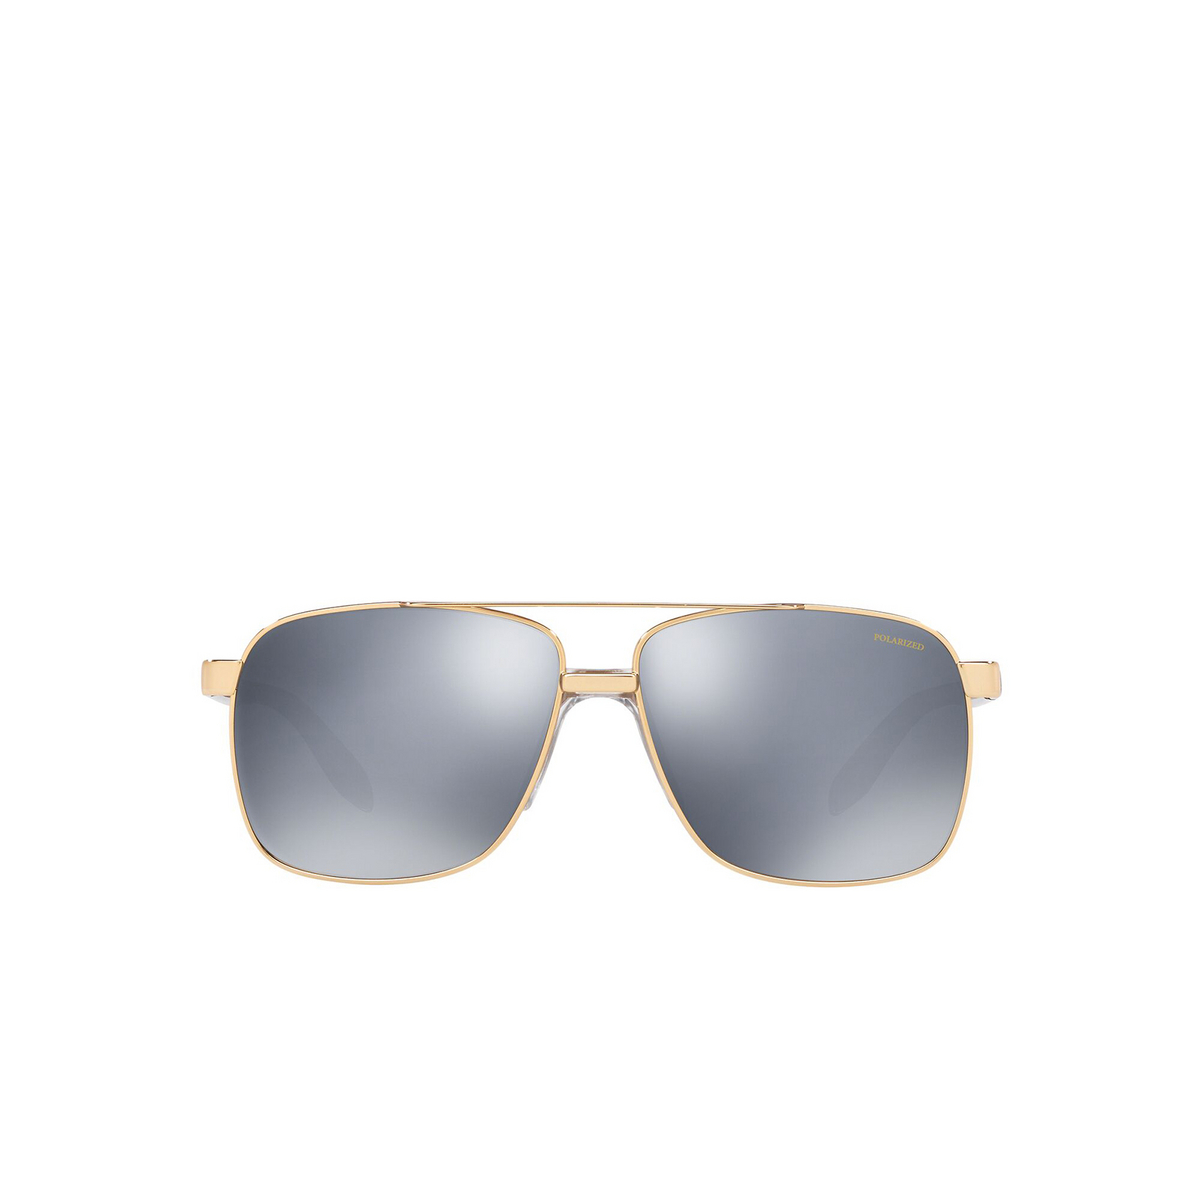 Versace® Square Sunglasses: VE2174 color Gold 1002Z3 - front view.